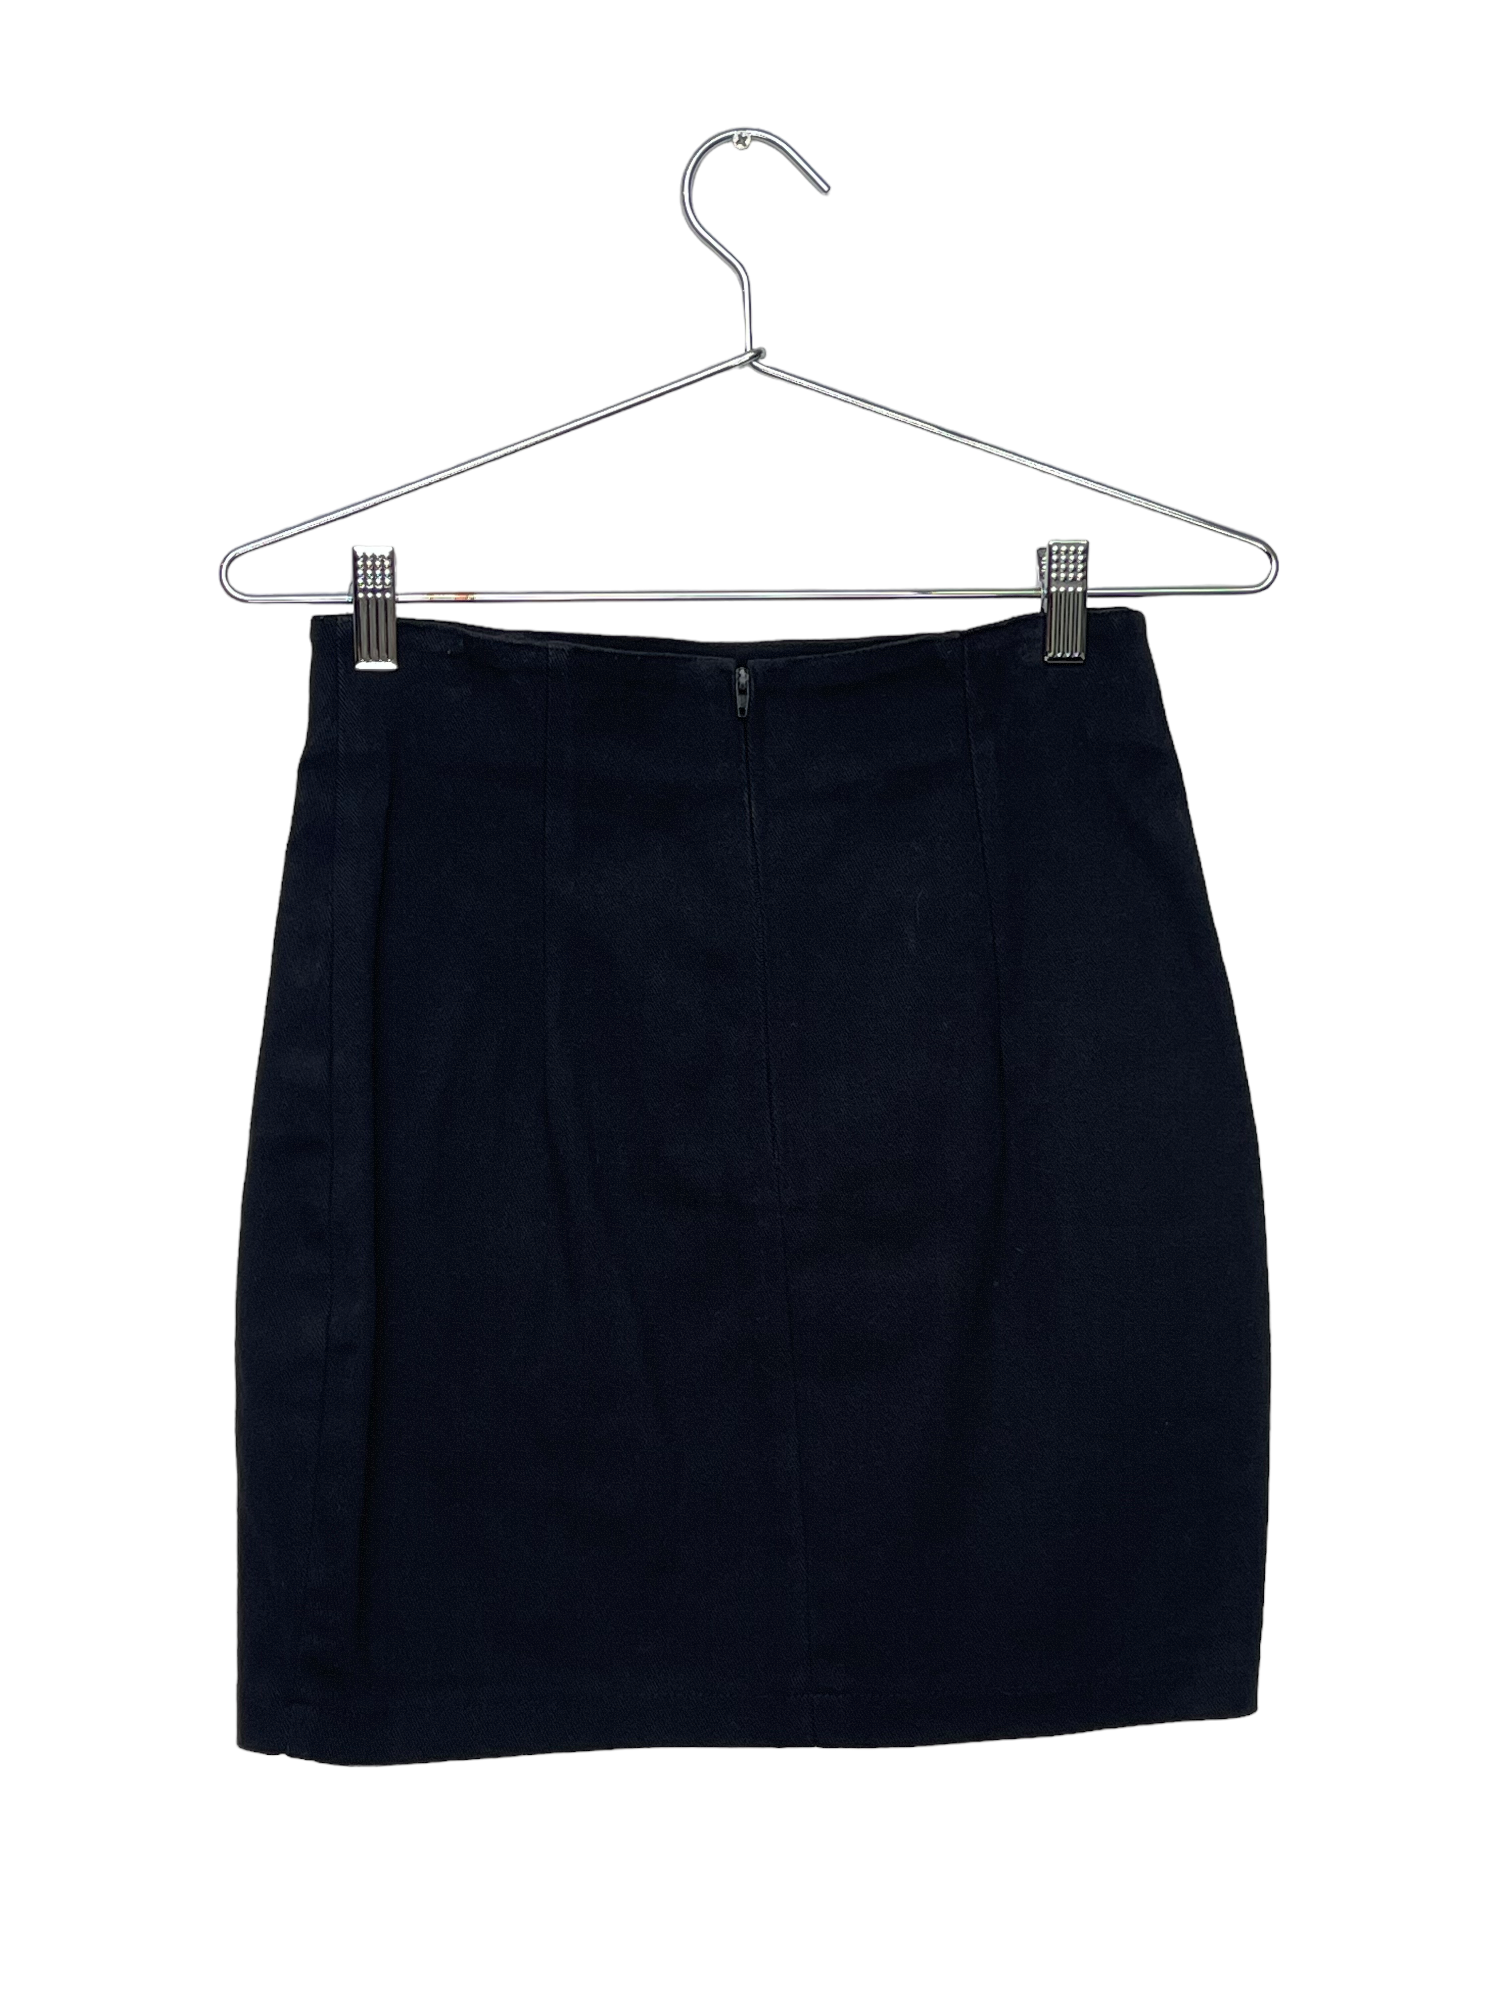 Black Embellished Mini Skirt